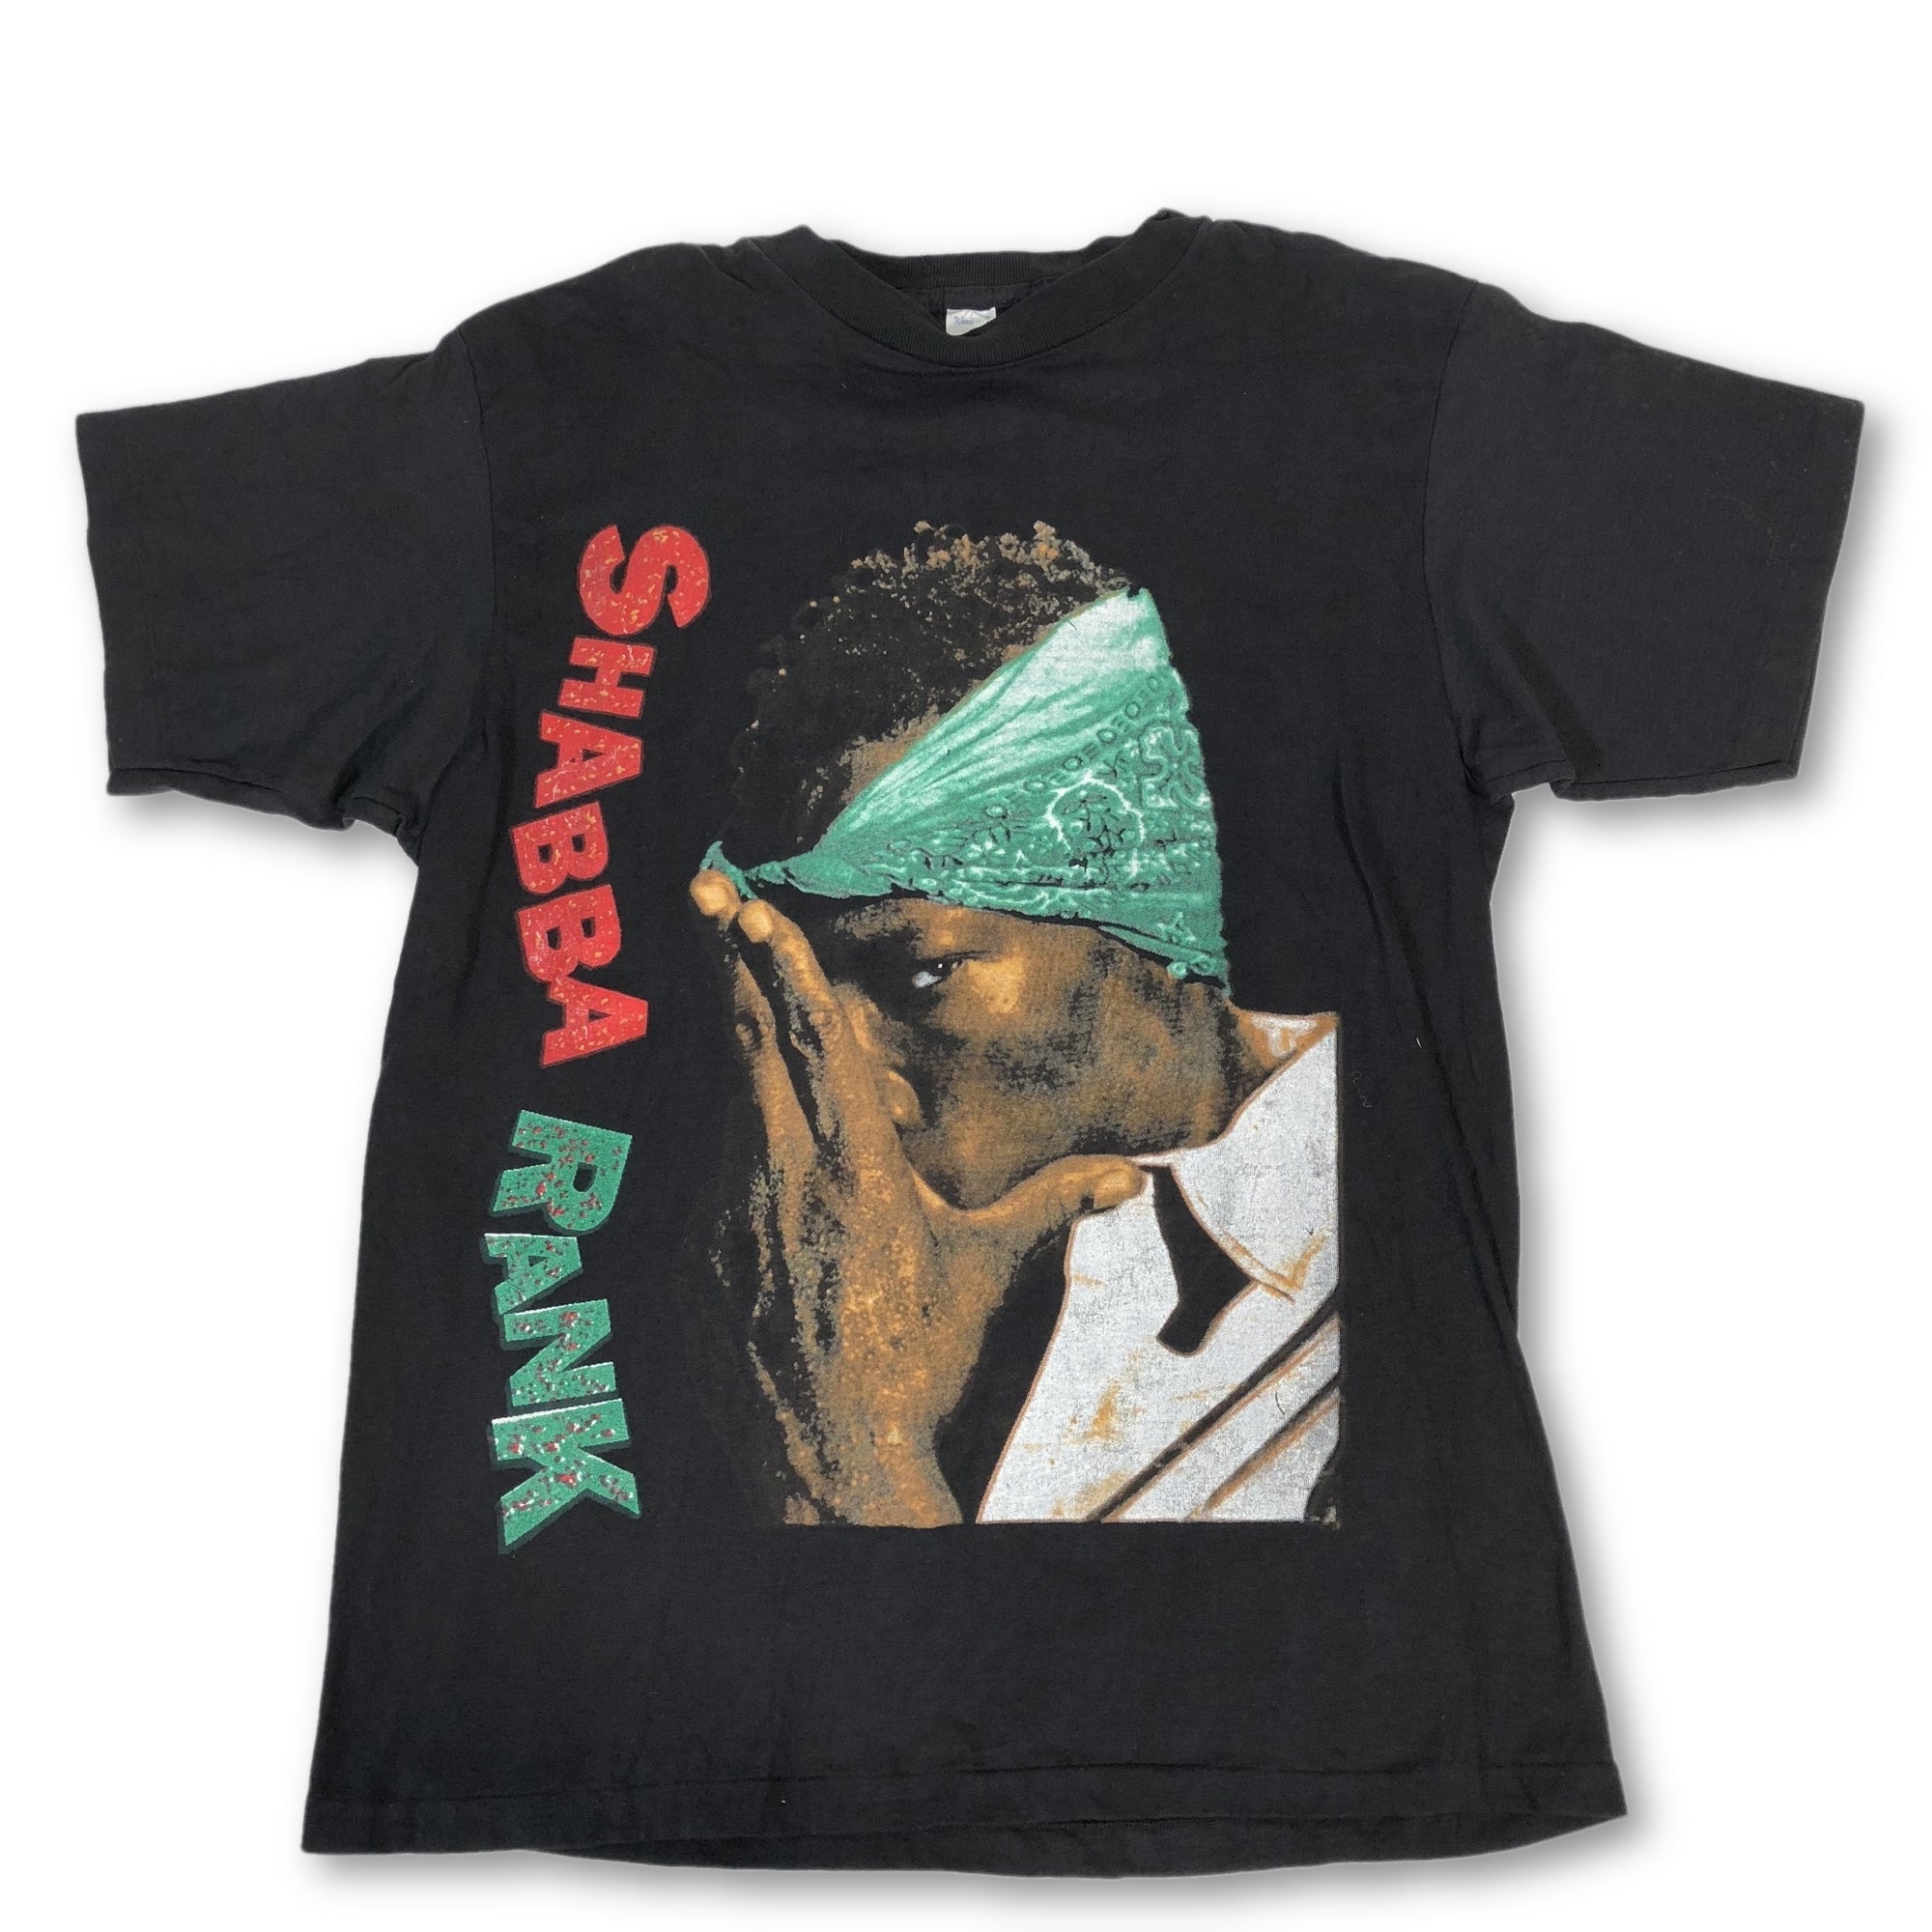 Vintage Shabba Ranks "Face" T-Shirt - jointcustodydc